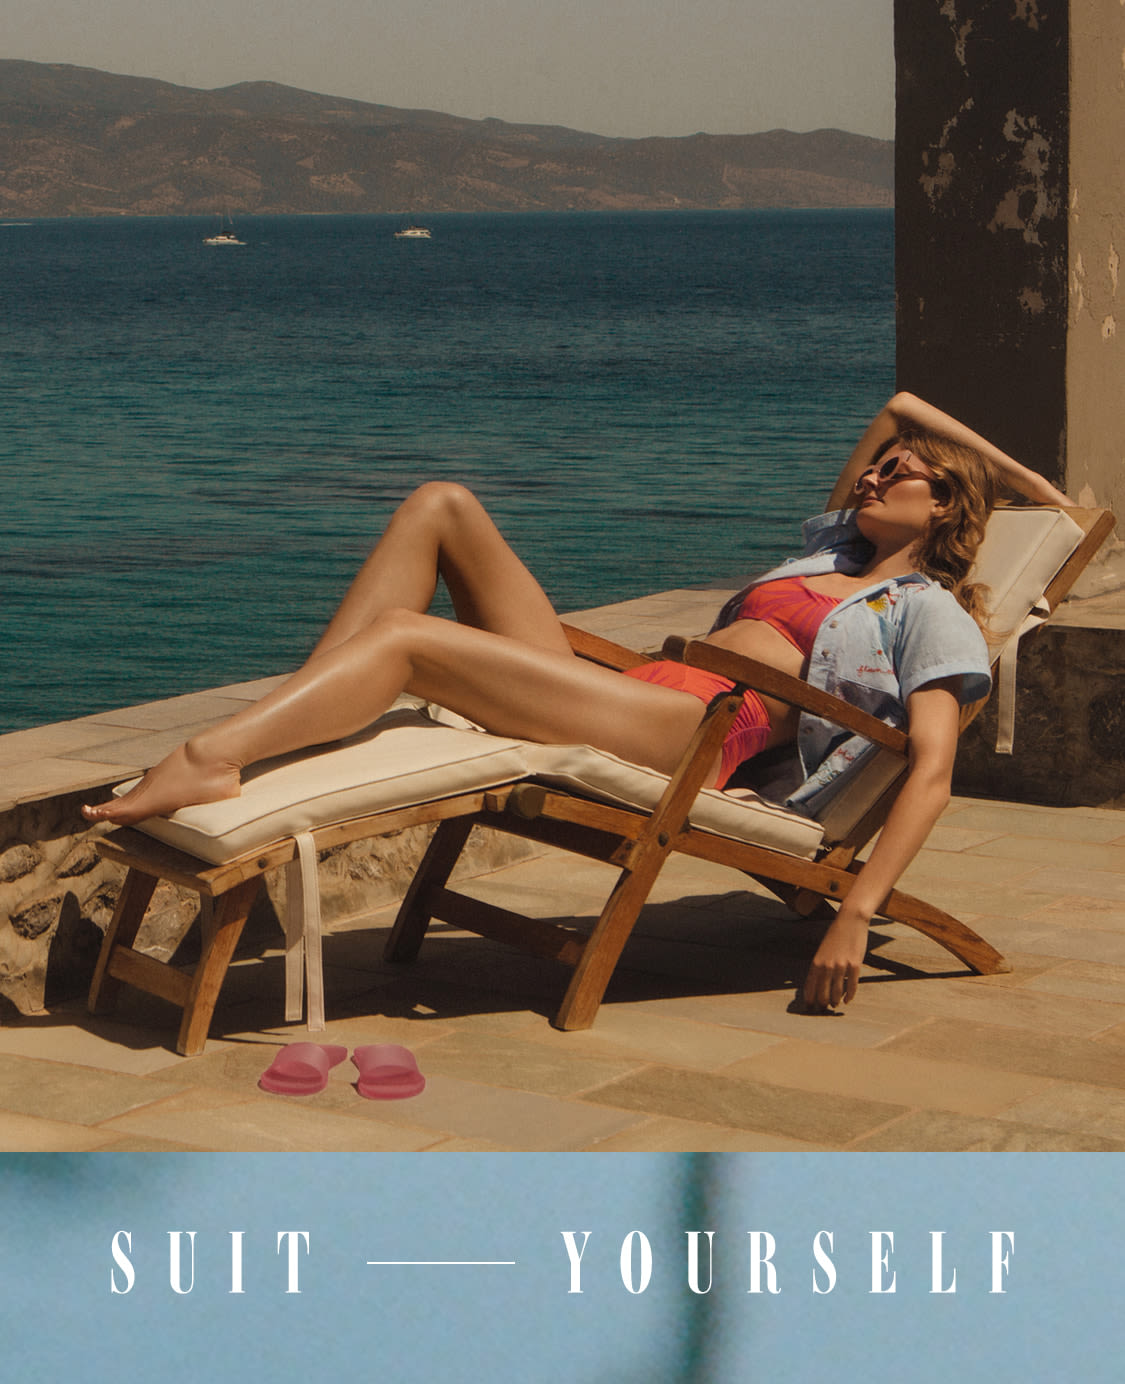 The Plunge Silhouette Swimsuit in Ocean – Maison De Mode